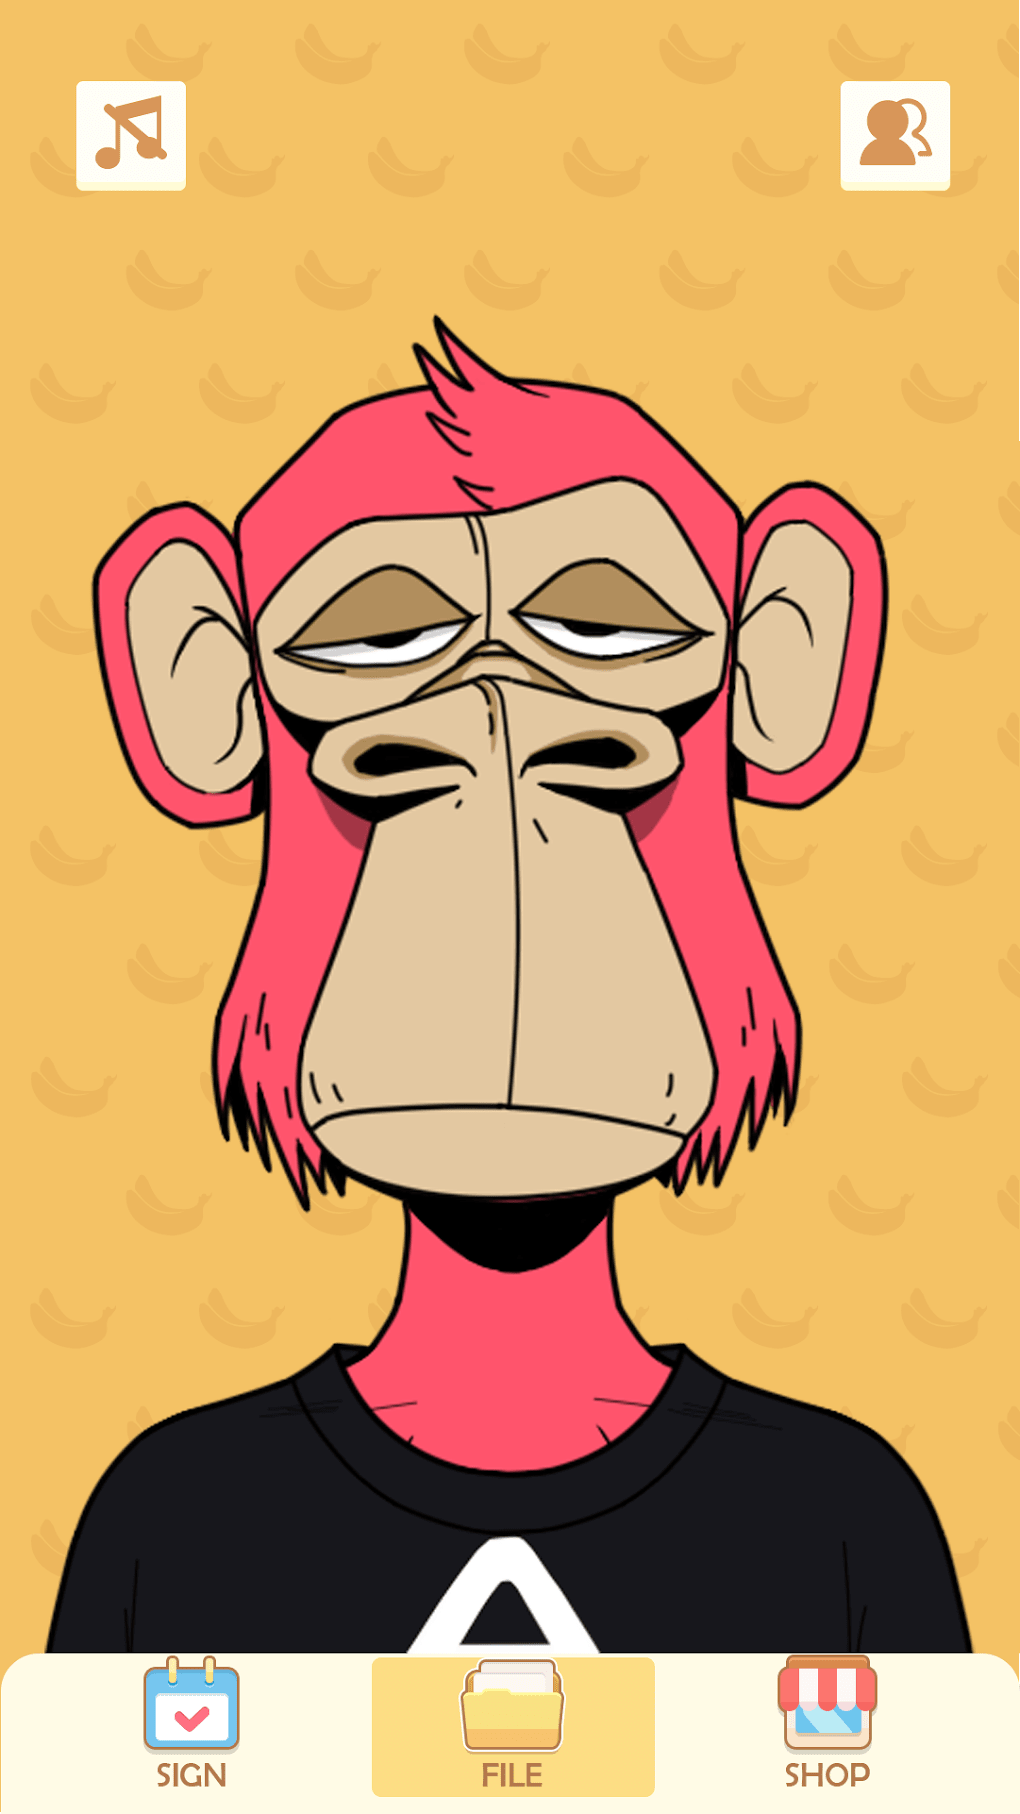 Bored Ape Creator - NFT Art (Create Avatar in 3 Minutes) E.02 